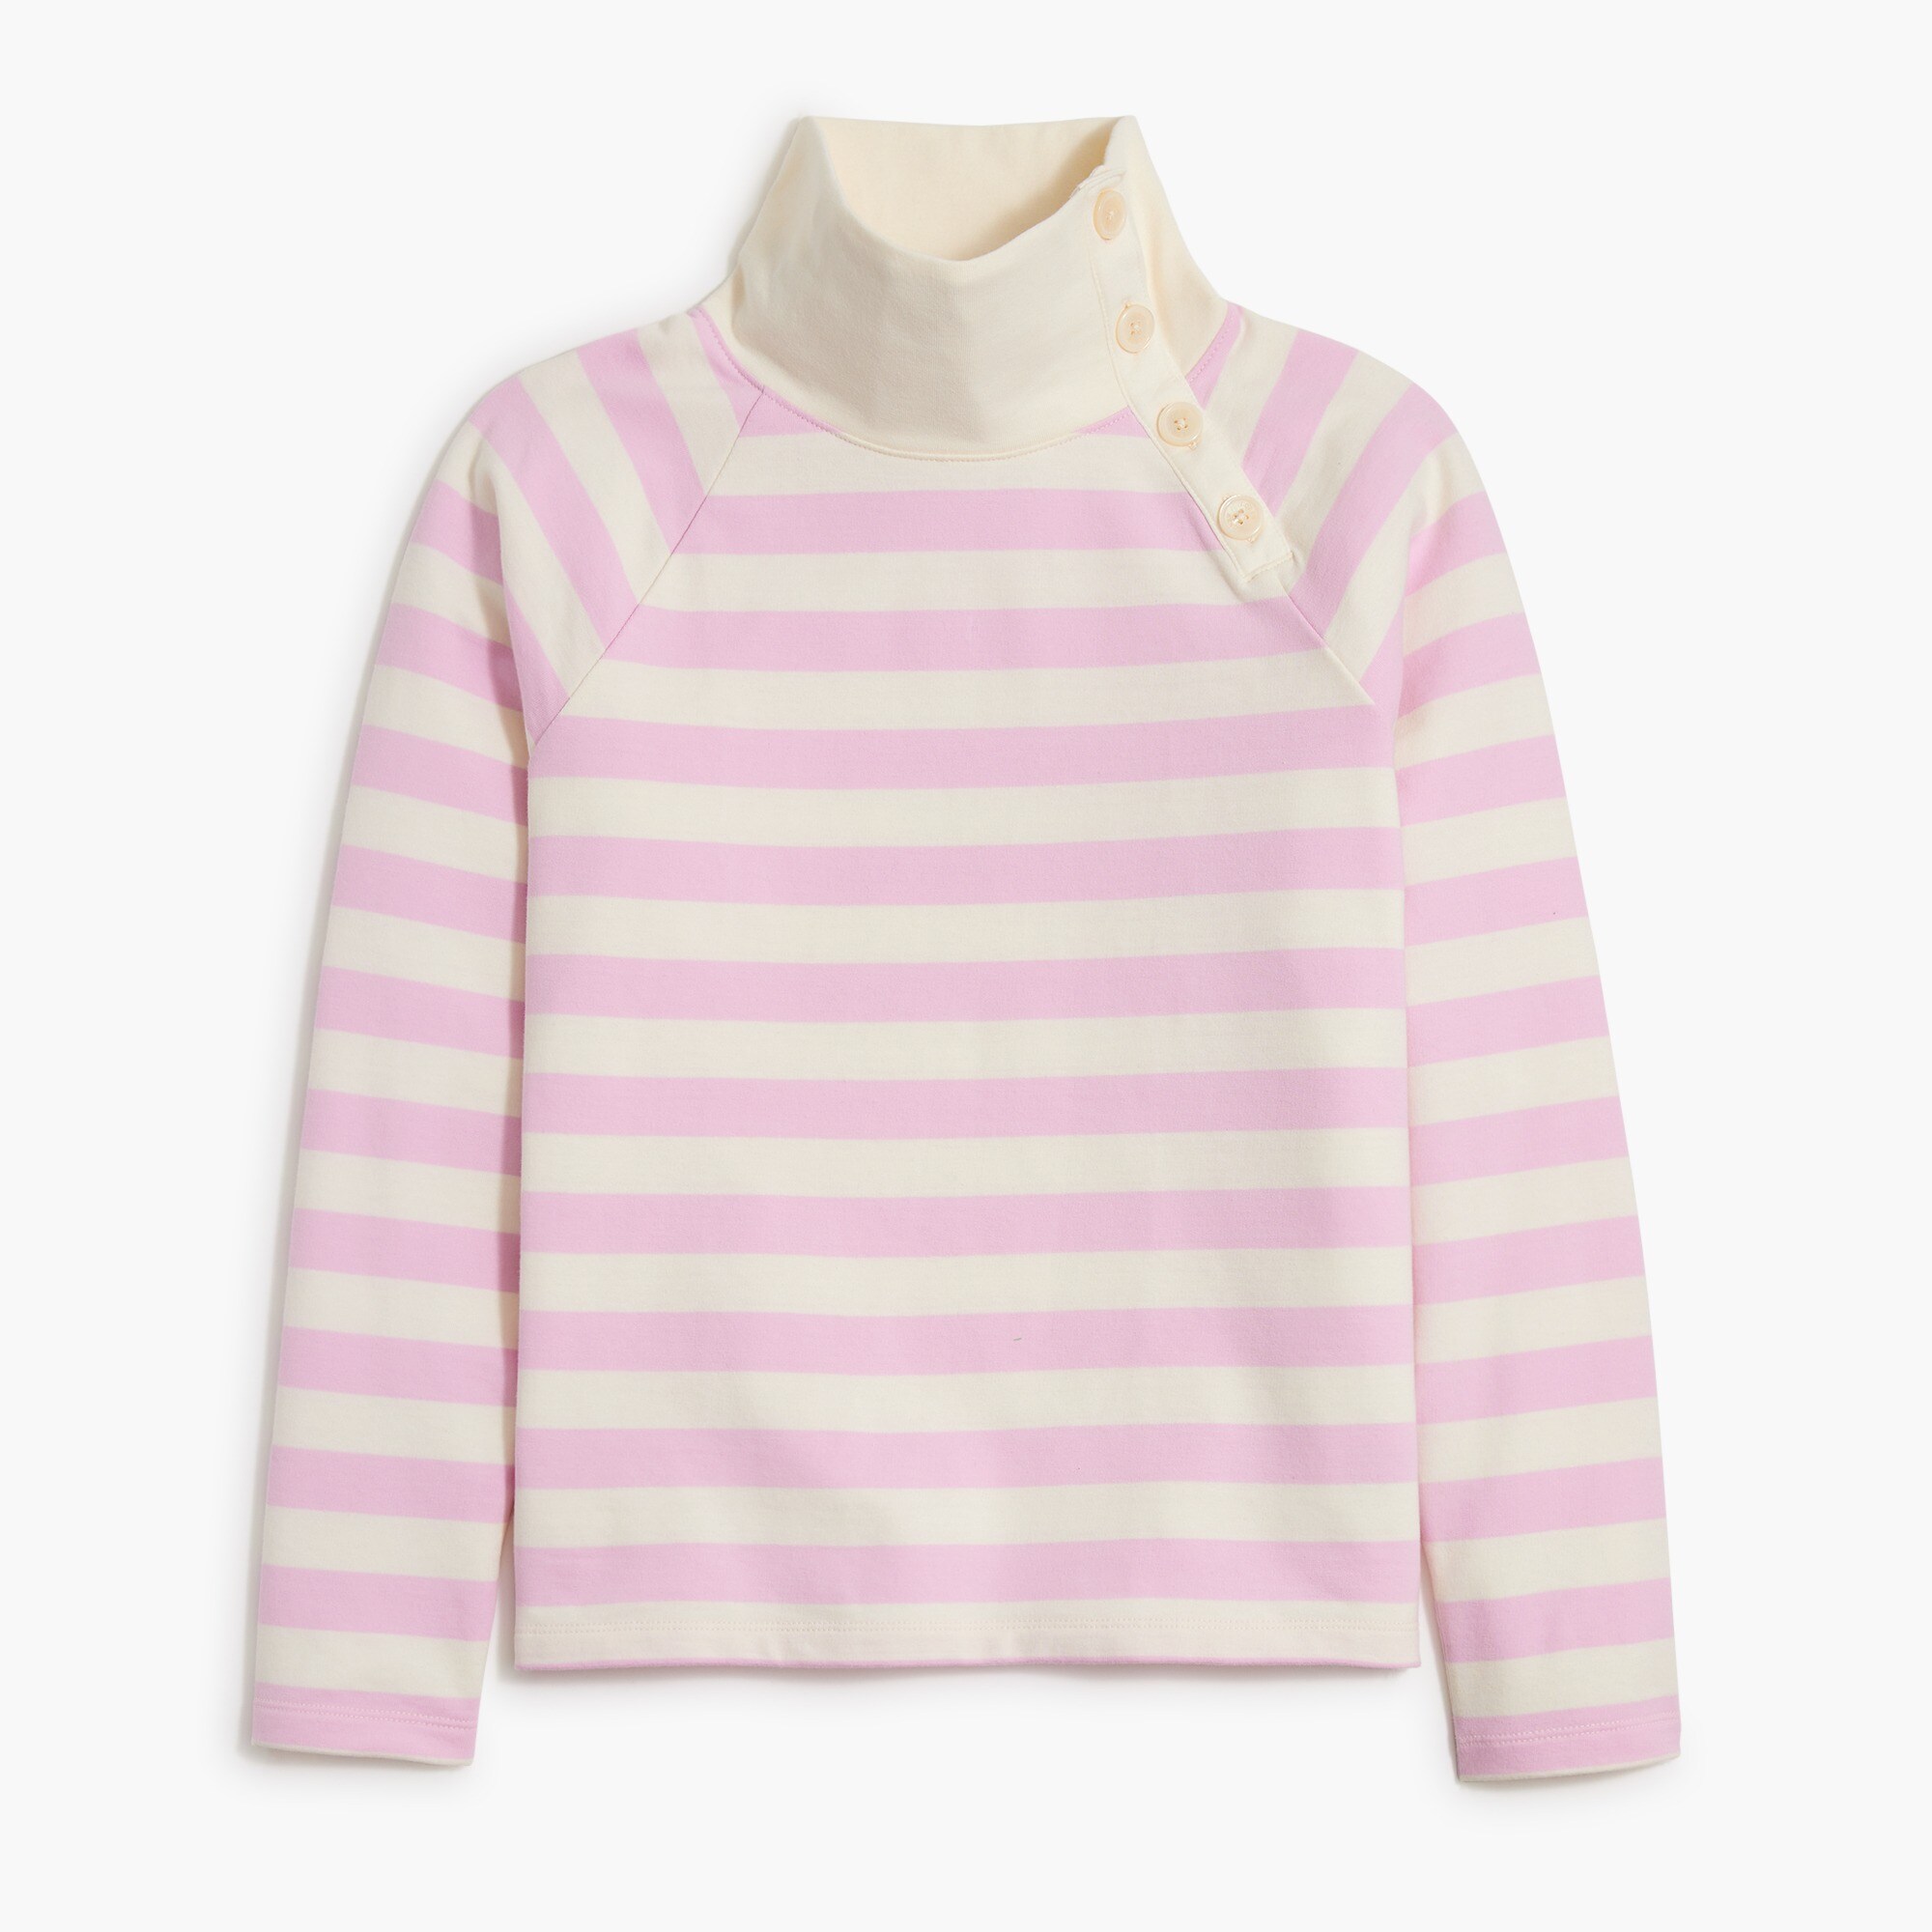  Striped wide button-collar pullover sweatshirt in lightweight terry